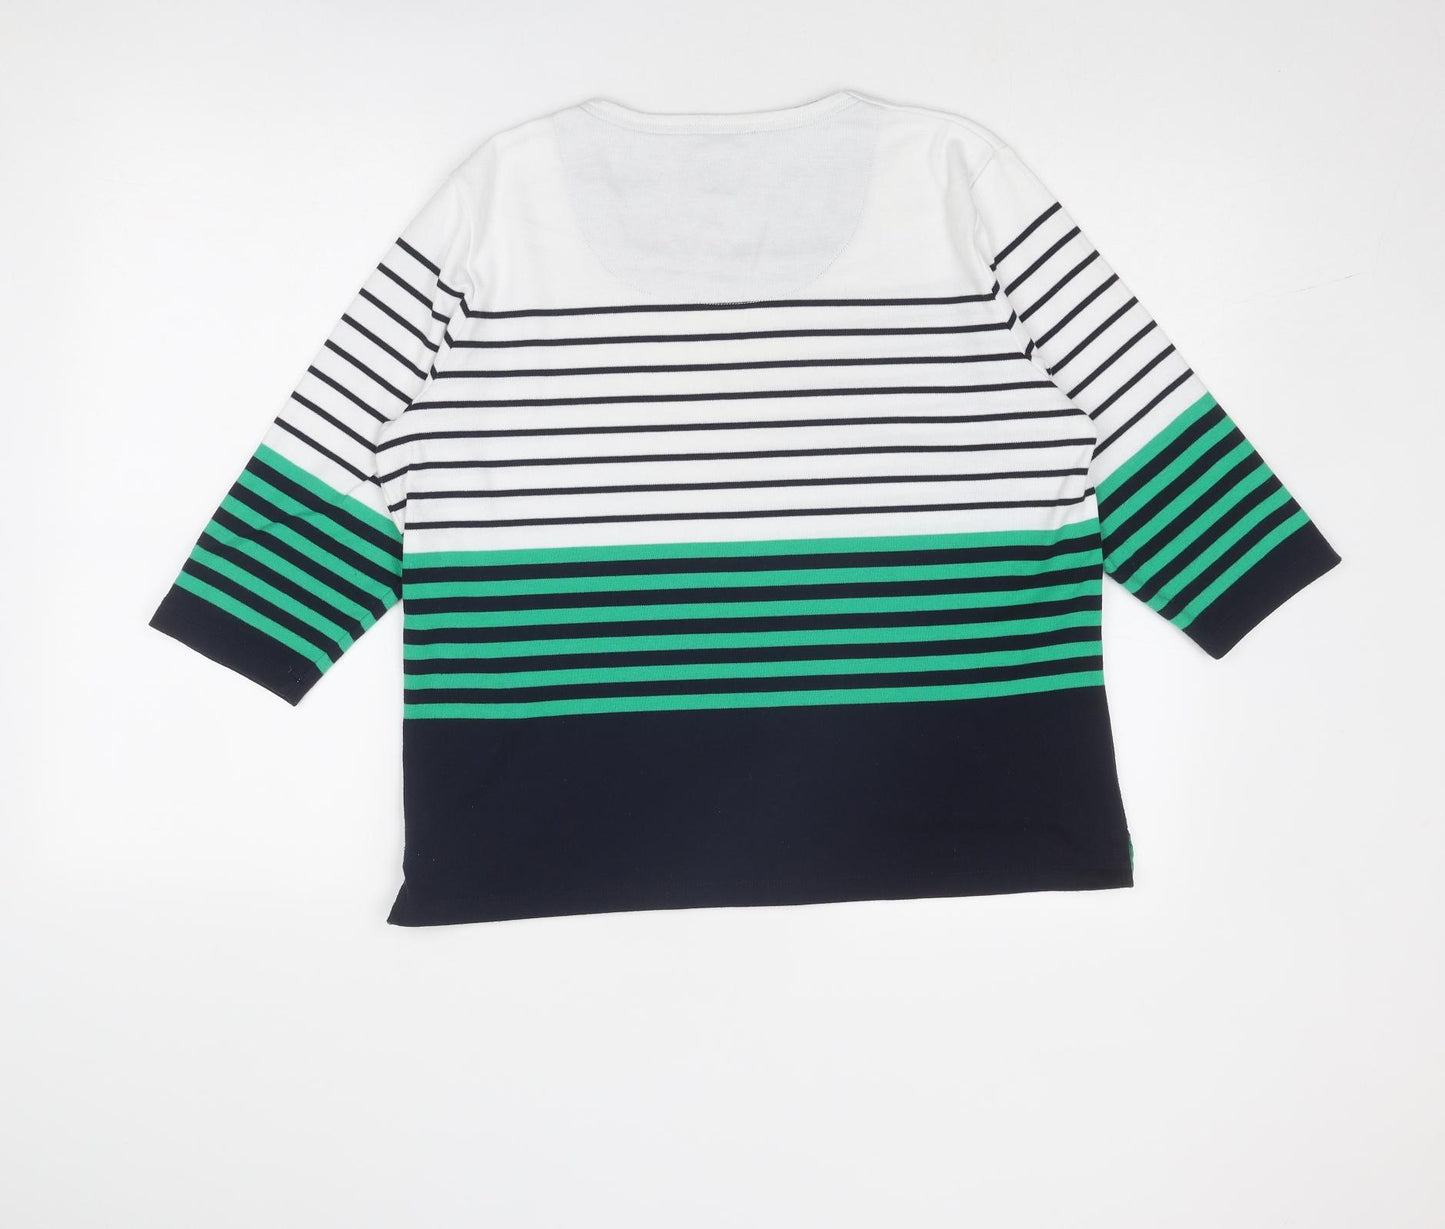 Tigi Womens Blue Striped Polyester Basic T-Shirt Size 14 Square Neck - Size 14-16